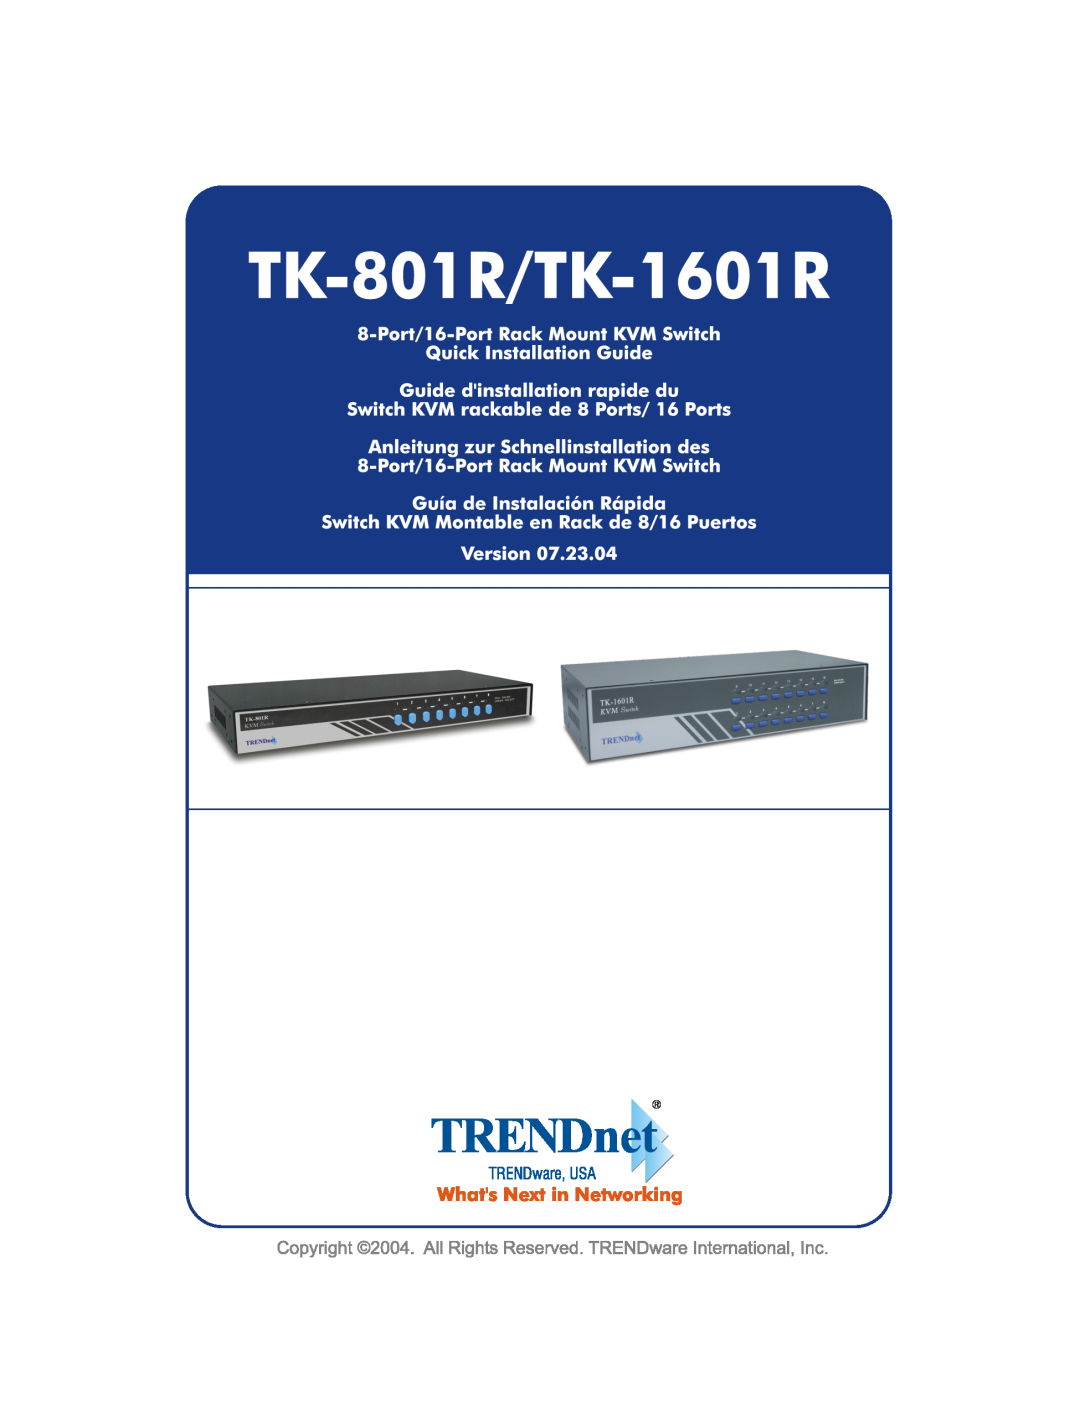 TRENDnet TK-801R, TK-1601R, 8-Port/16-Port Rack Mount KVM Switch manual 